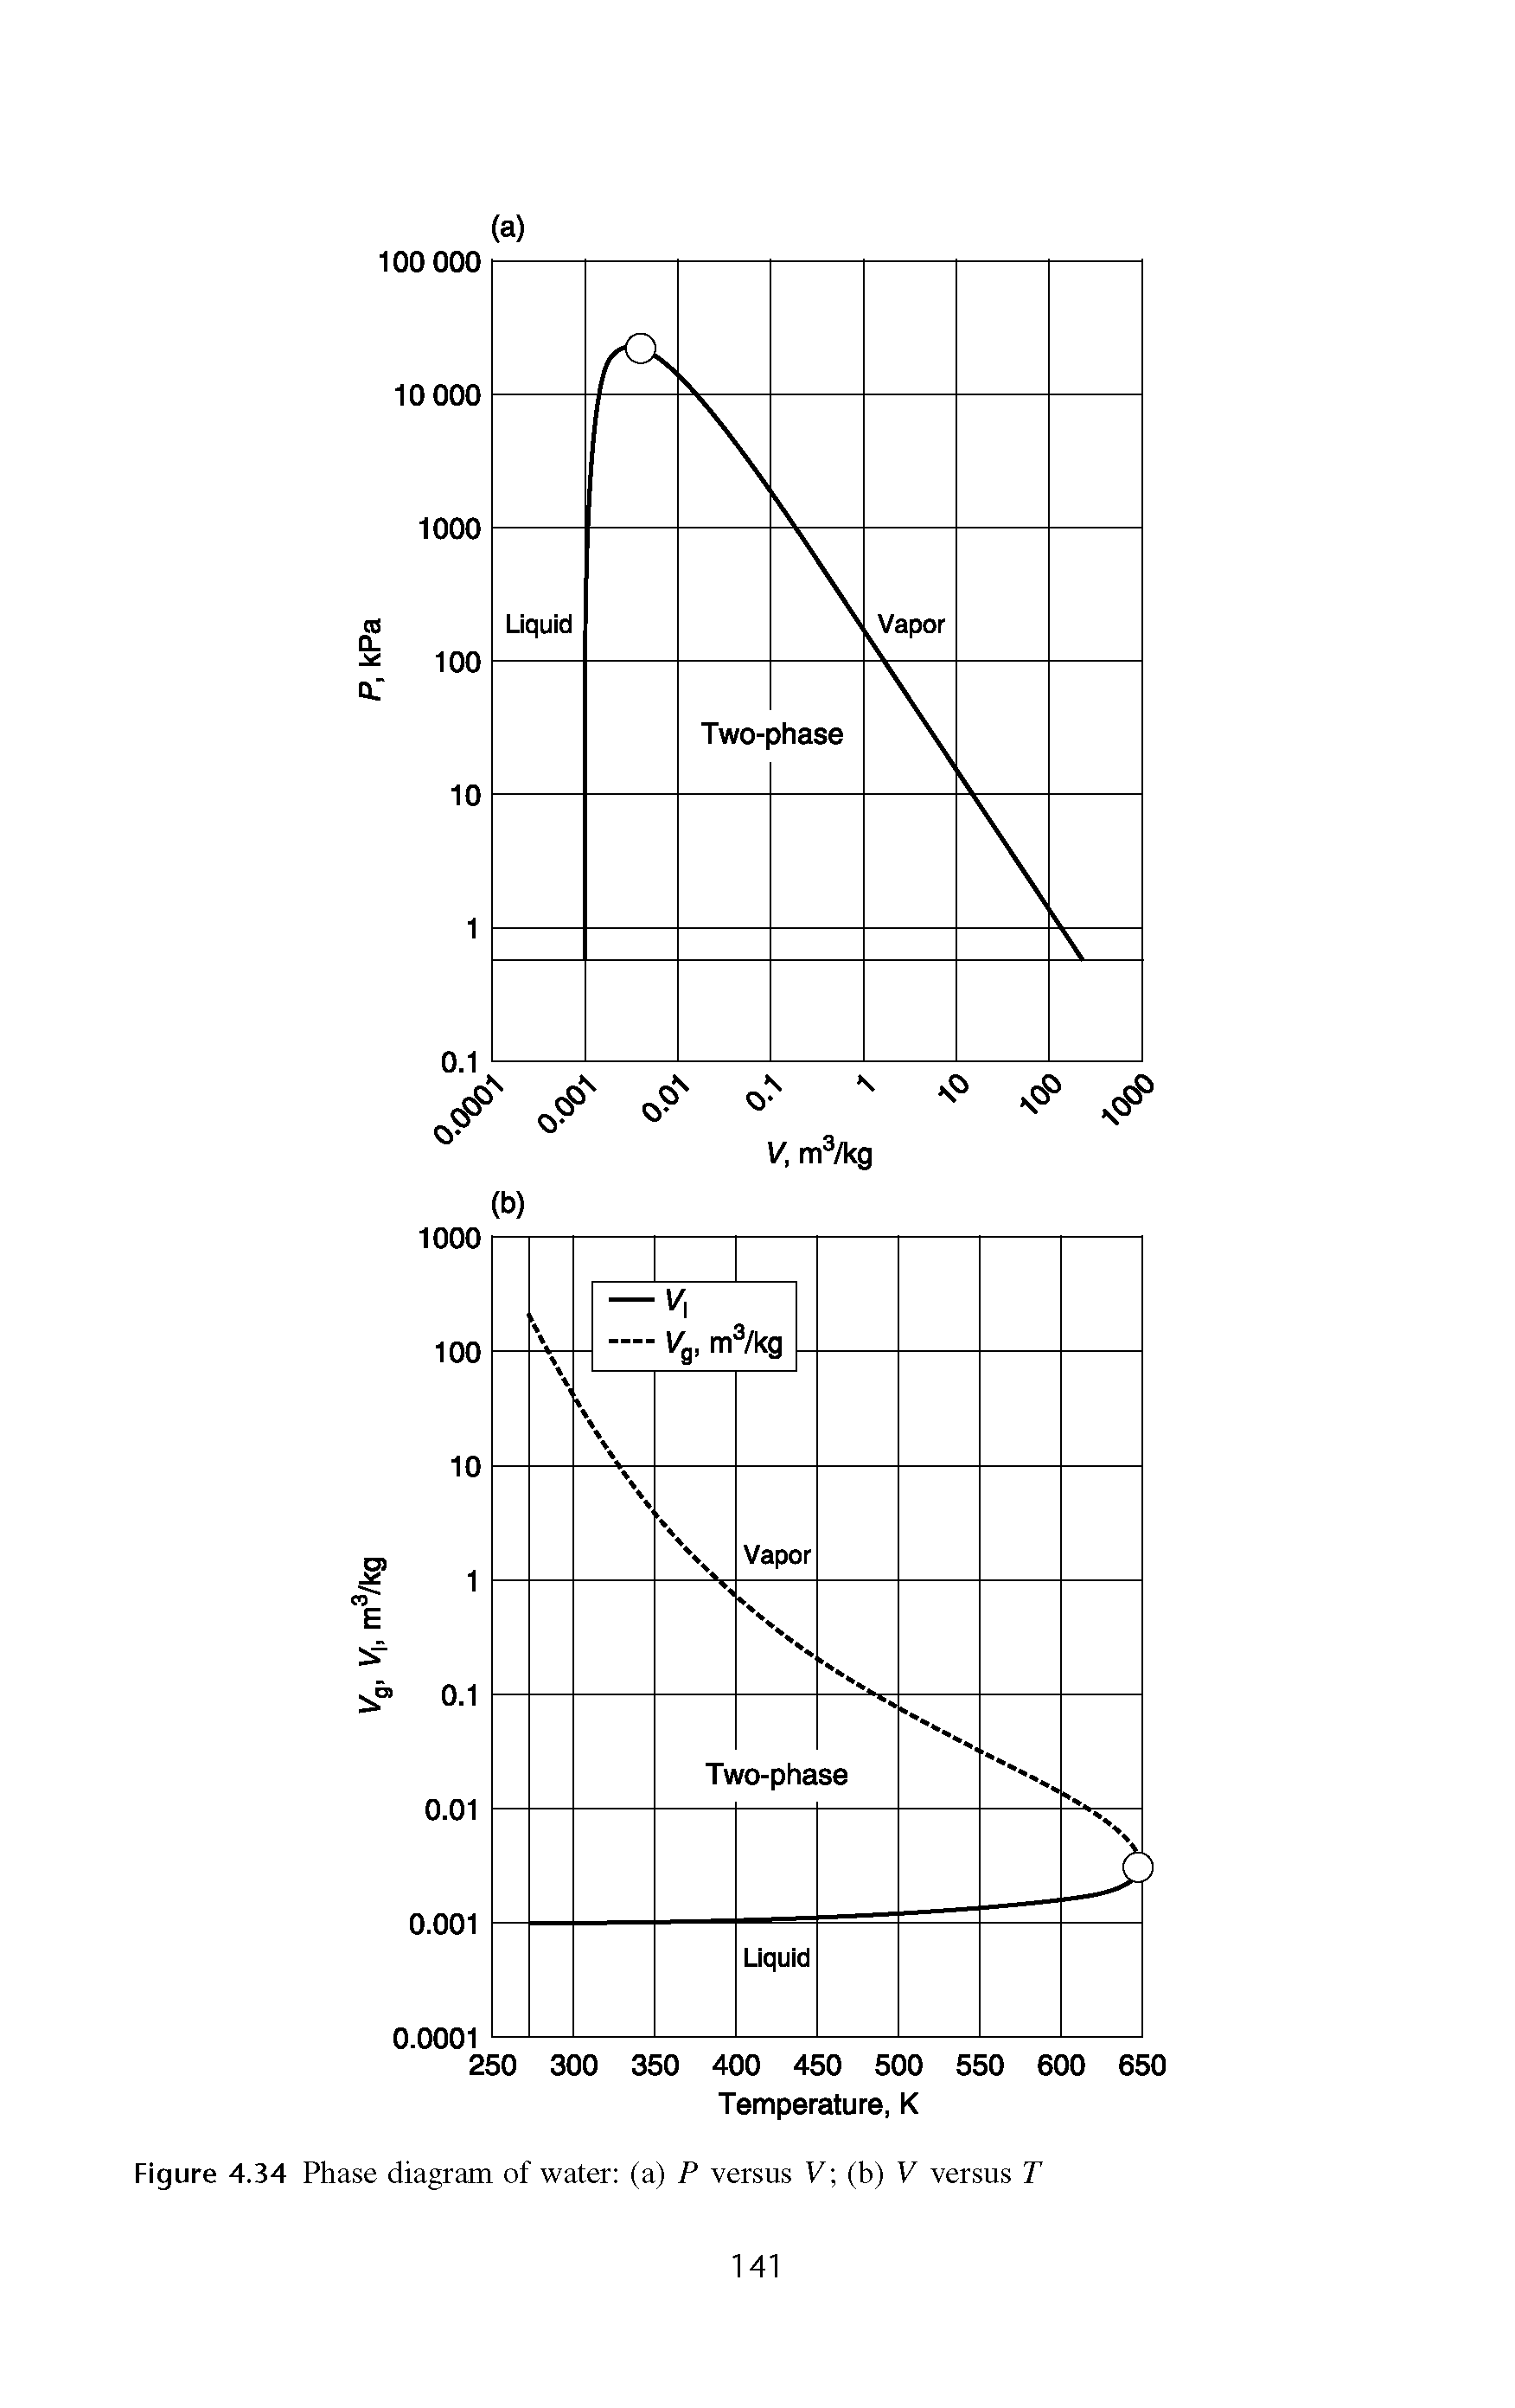 Figure 4.34 Phase diagram of water (a) P versus V (b) V versus T...